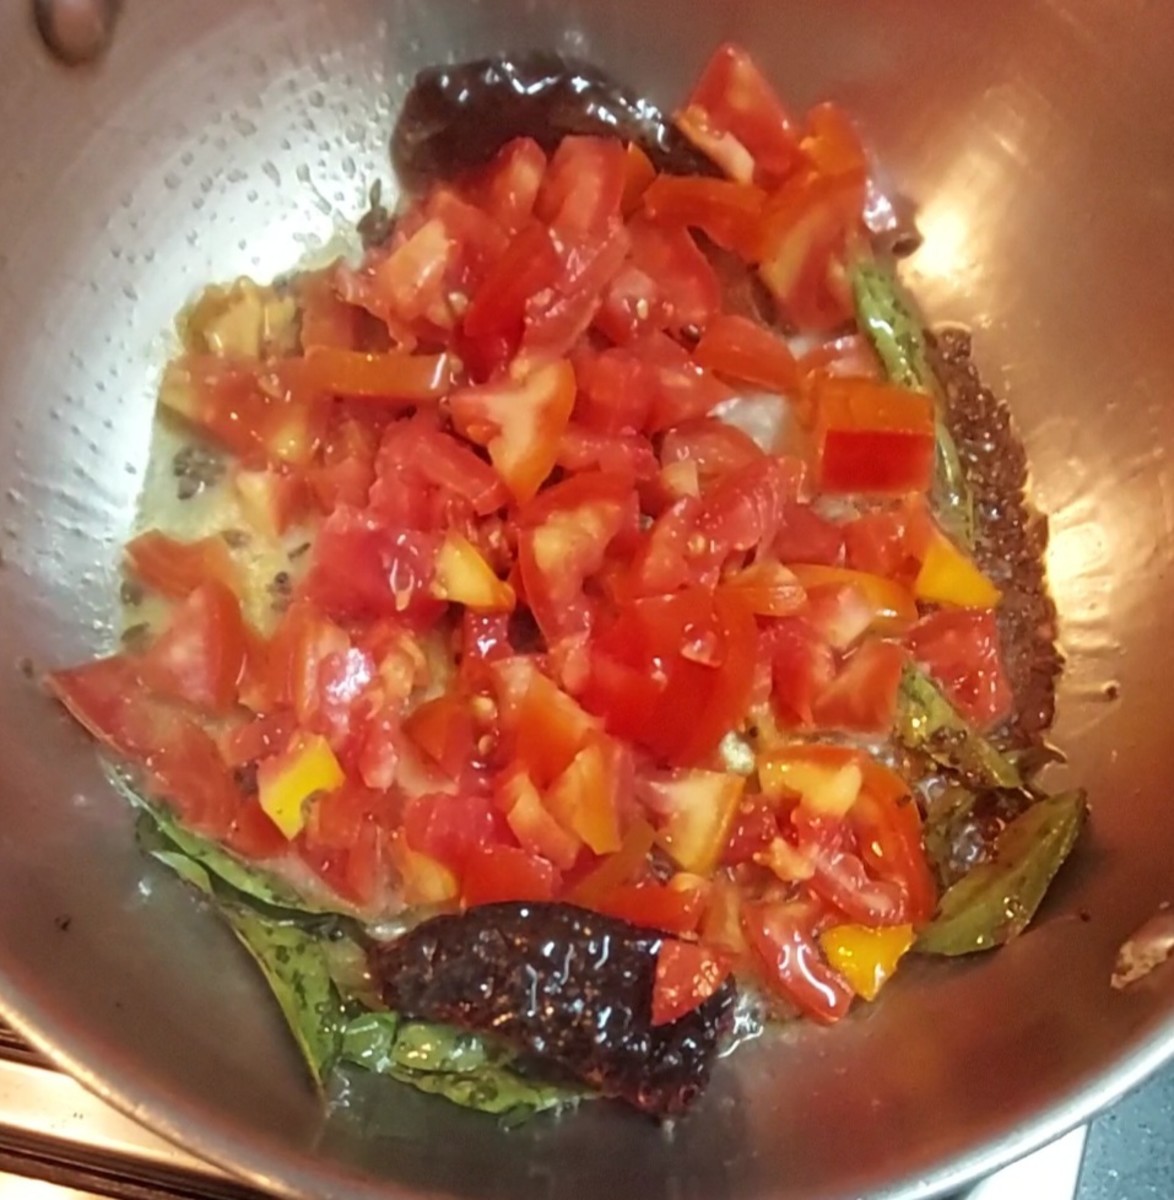 Add 2 medium-sized chopped tomatoes.